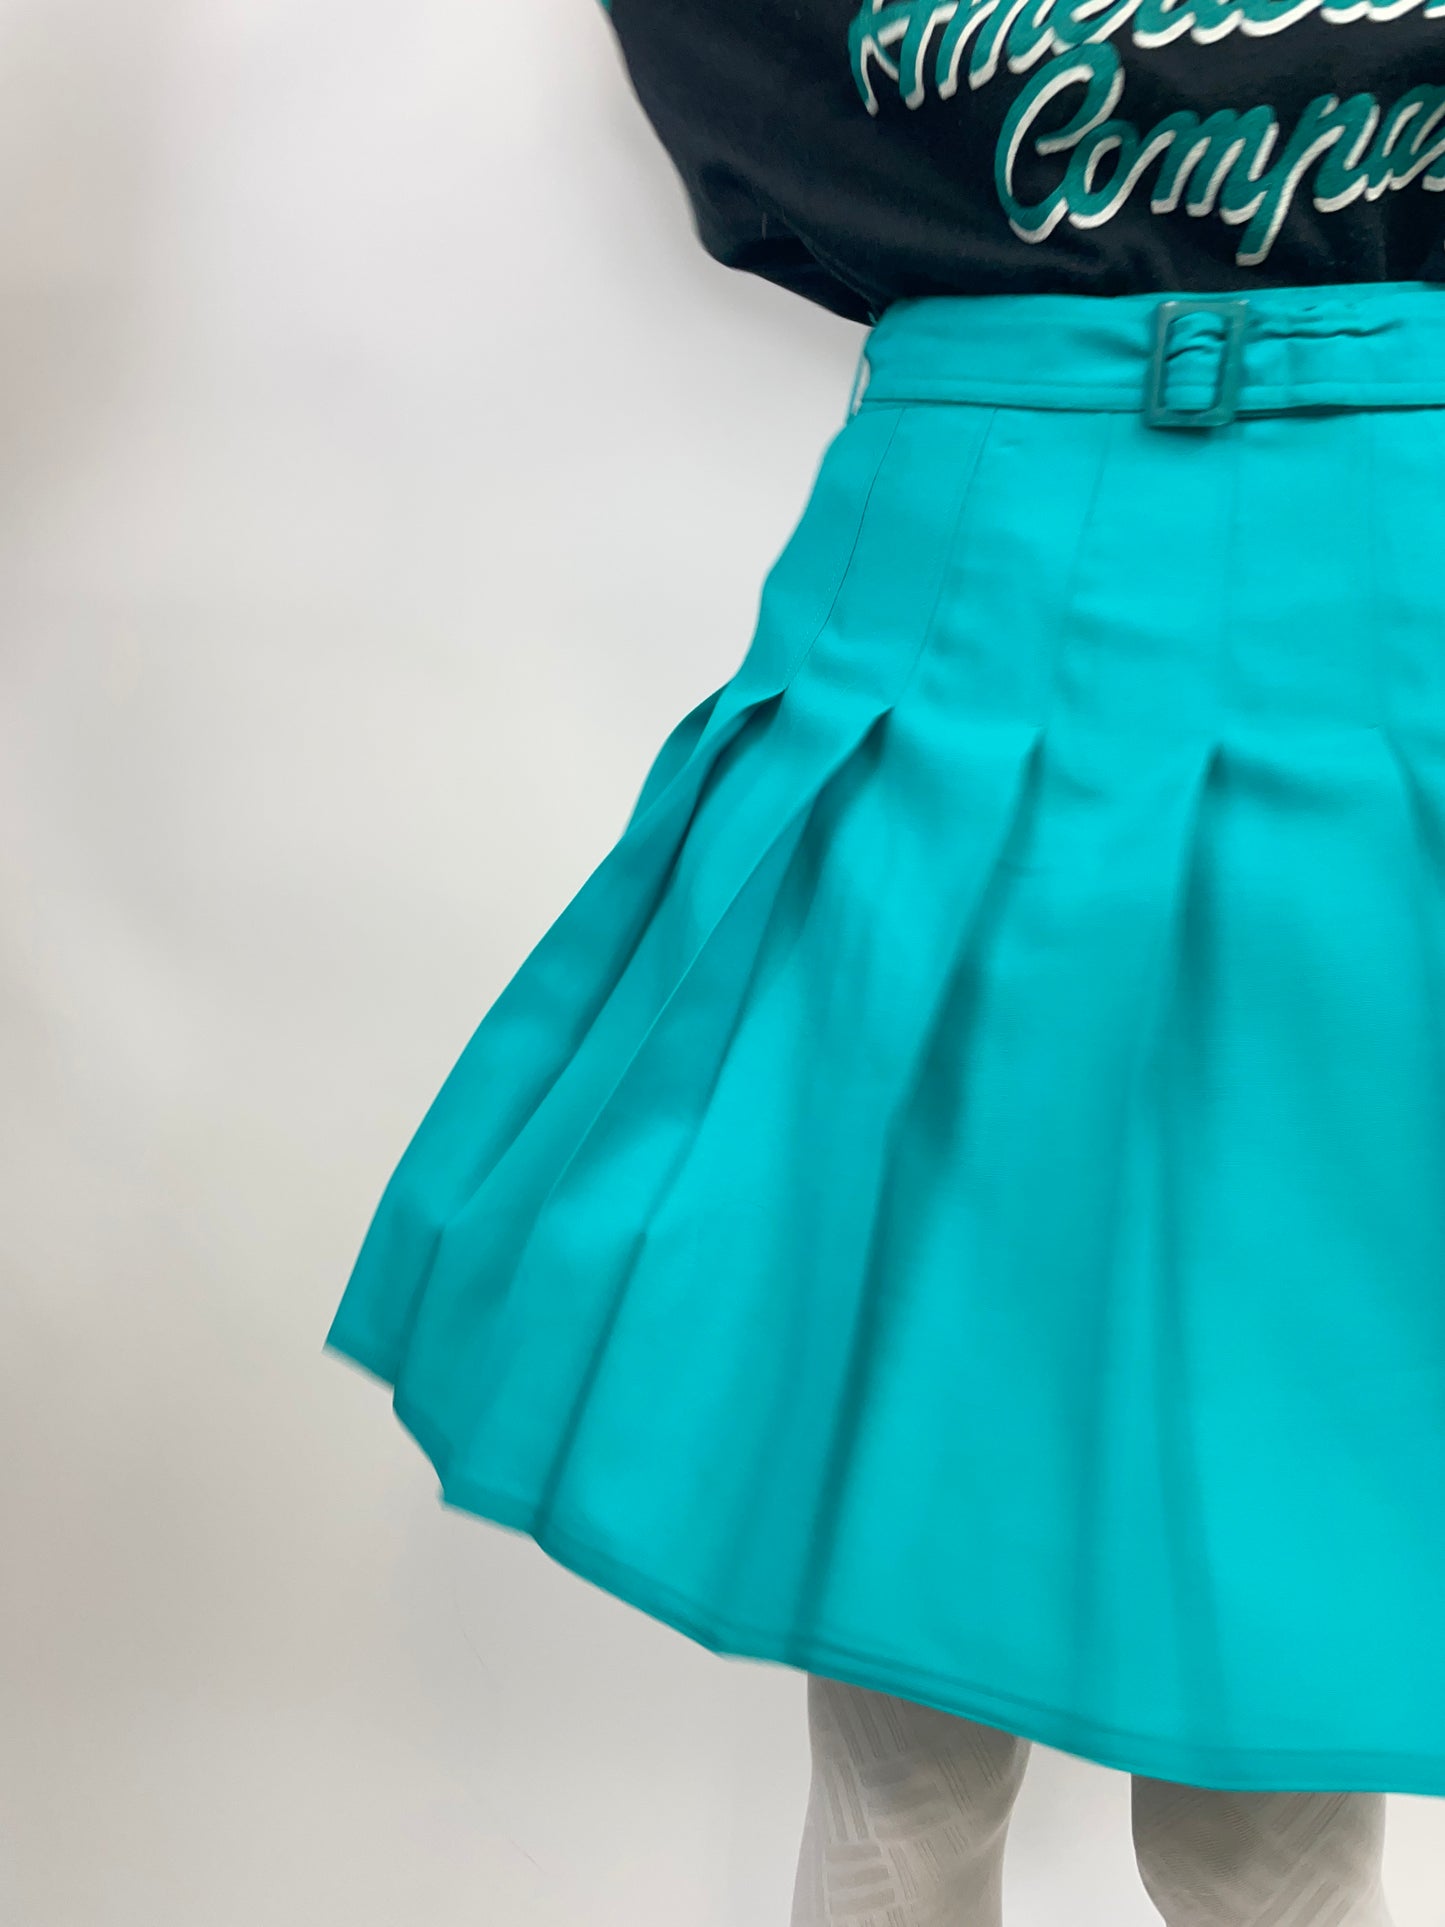 Pennyblack 1980s mini skirt